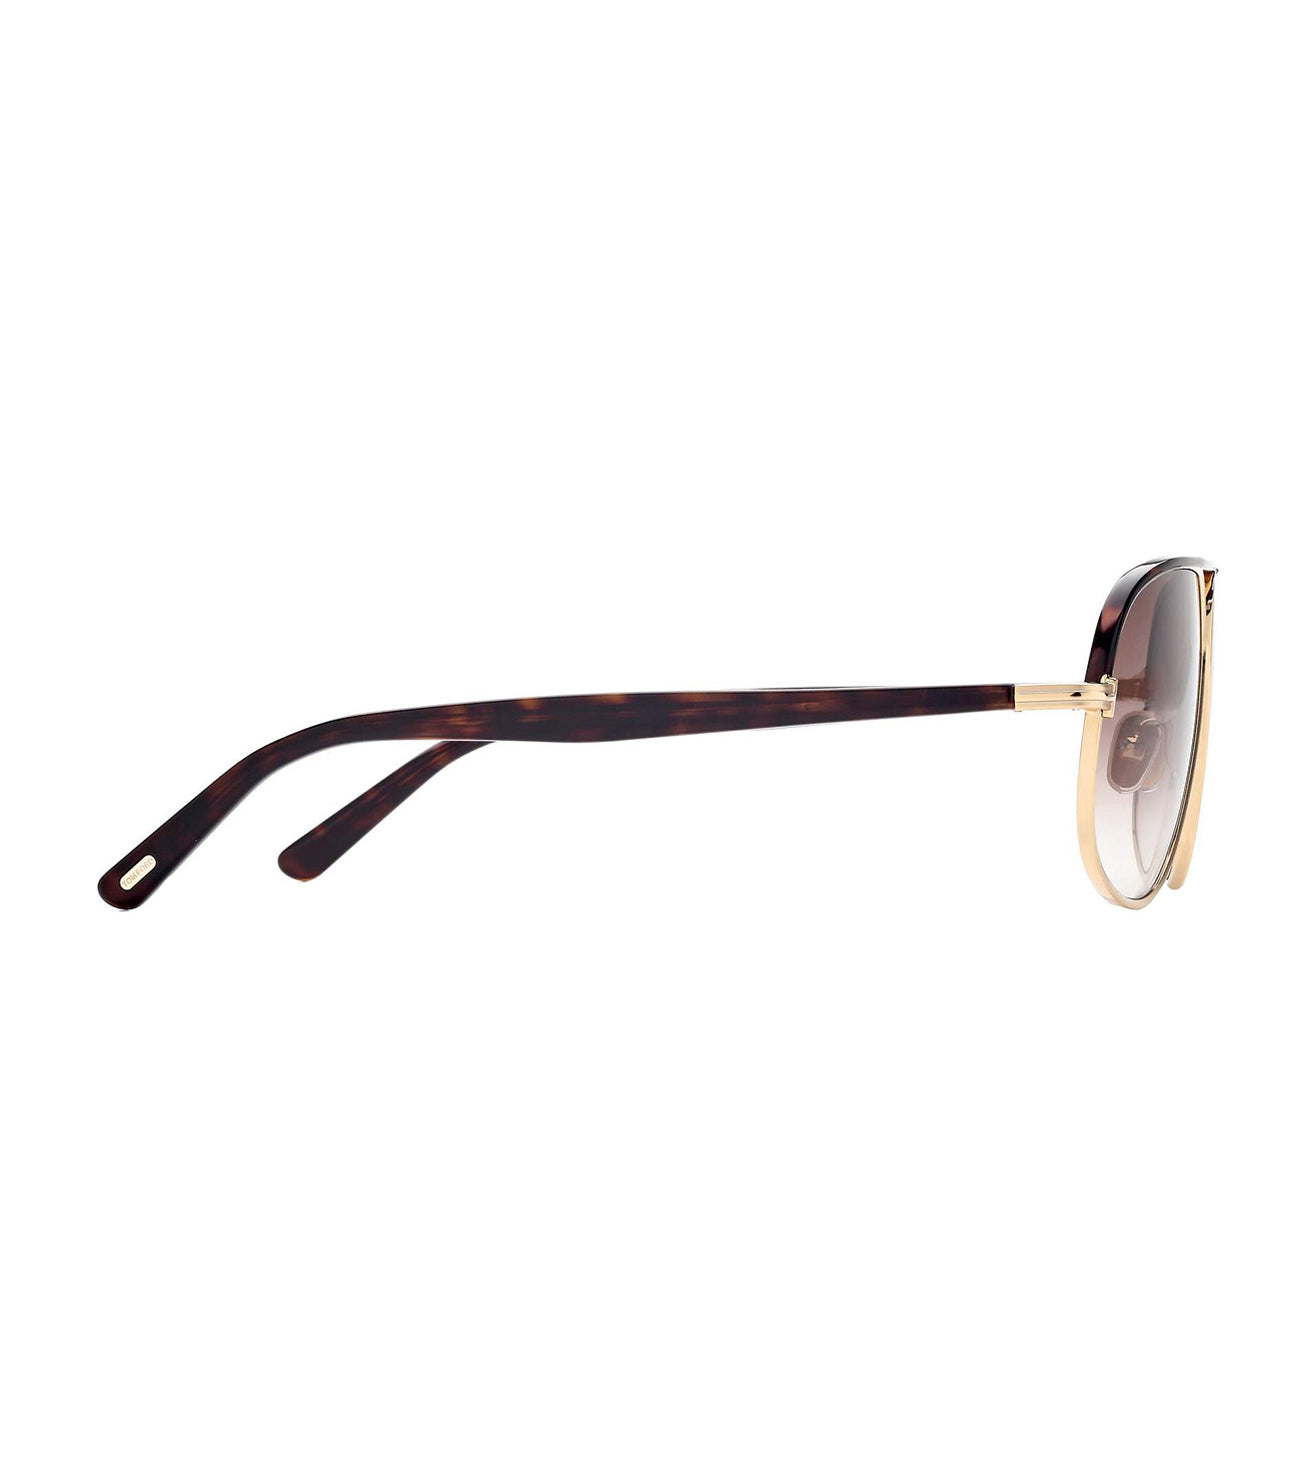 Tom Ford Men's Gradient Brown Aviator Sunglasses